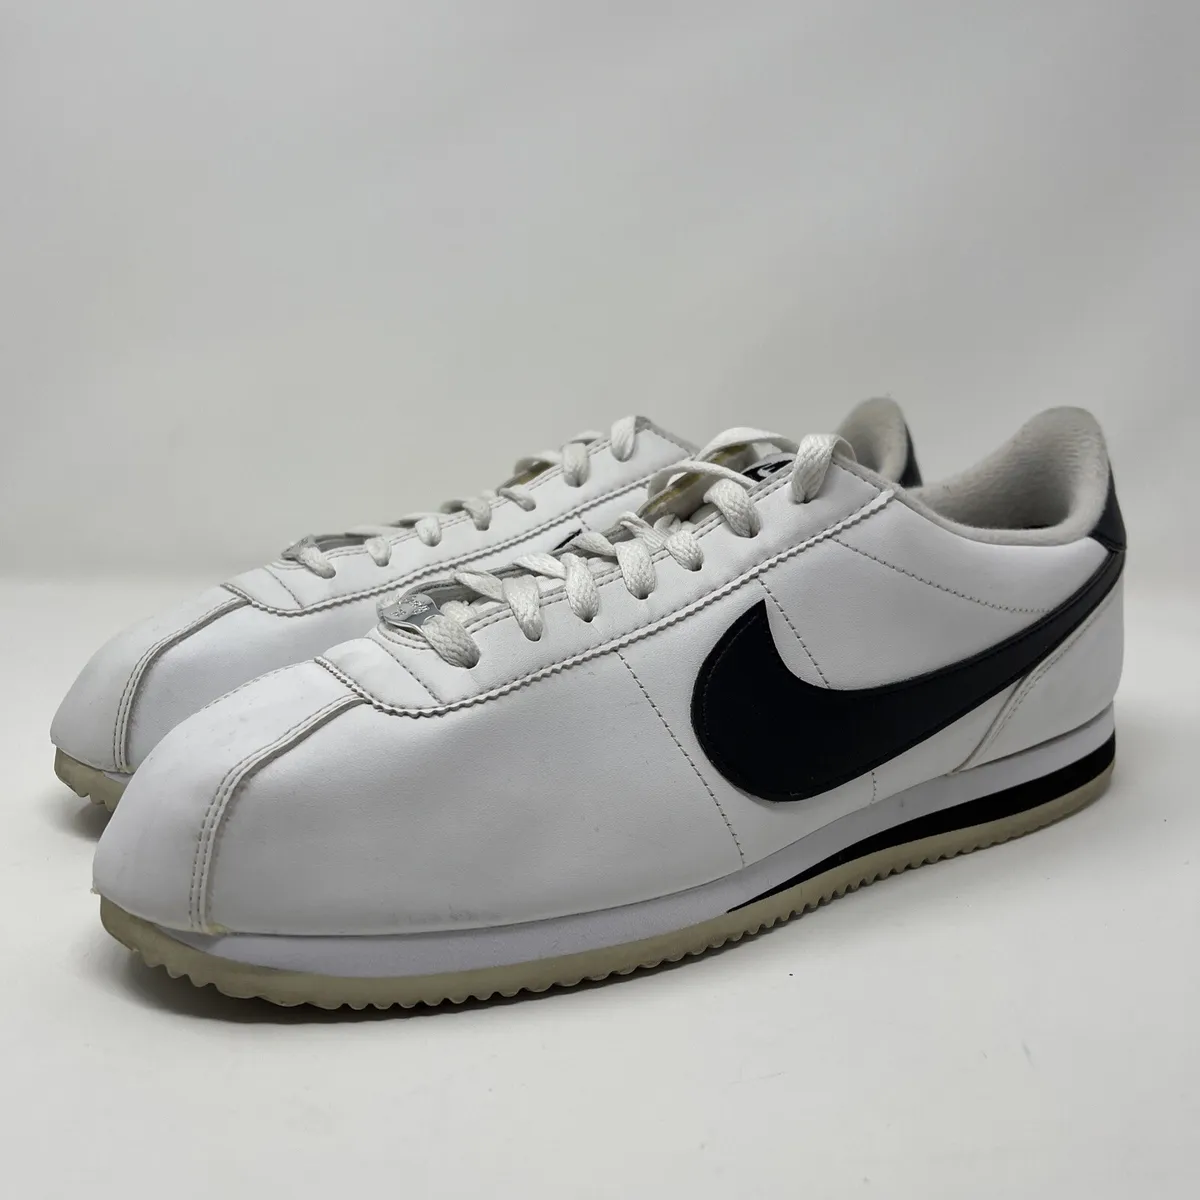 Nike Leather White Black Classic Panda 819719-100 Men's Size 11.5 eBay